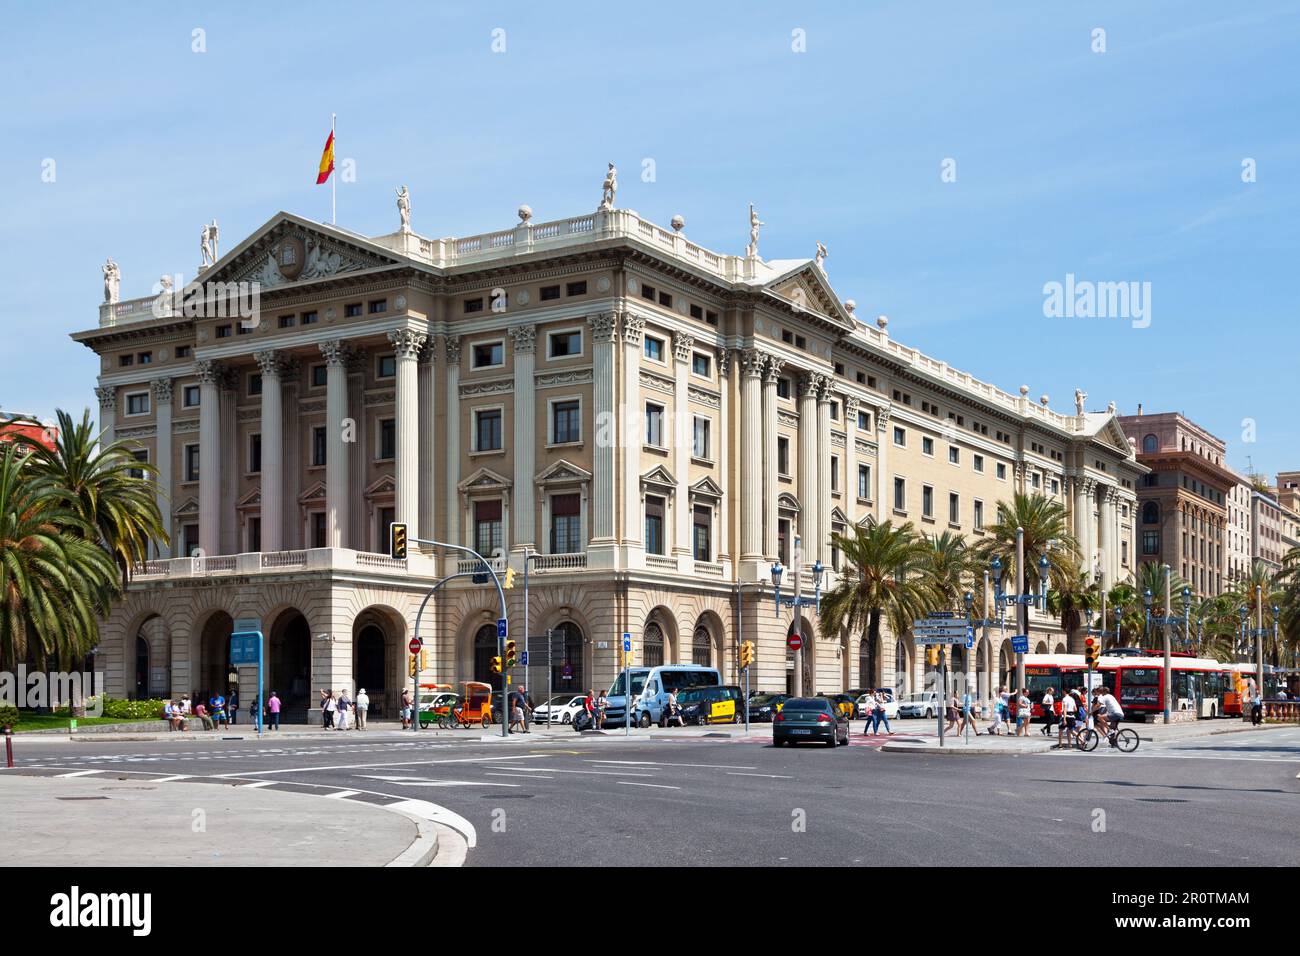 Barcelona, Spanien - Juni 08 2018: Die Militärregierung von Barcelona (Katalanisch: Gobierno Militar de Barcelona), wenige Meter vom Mirador de Colom, Stockfoto